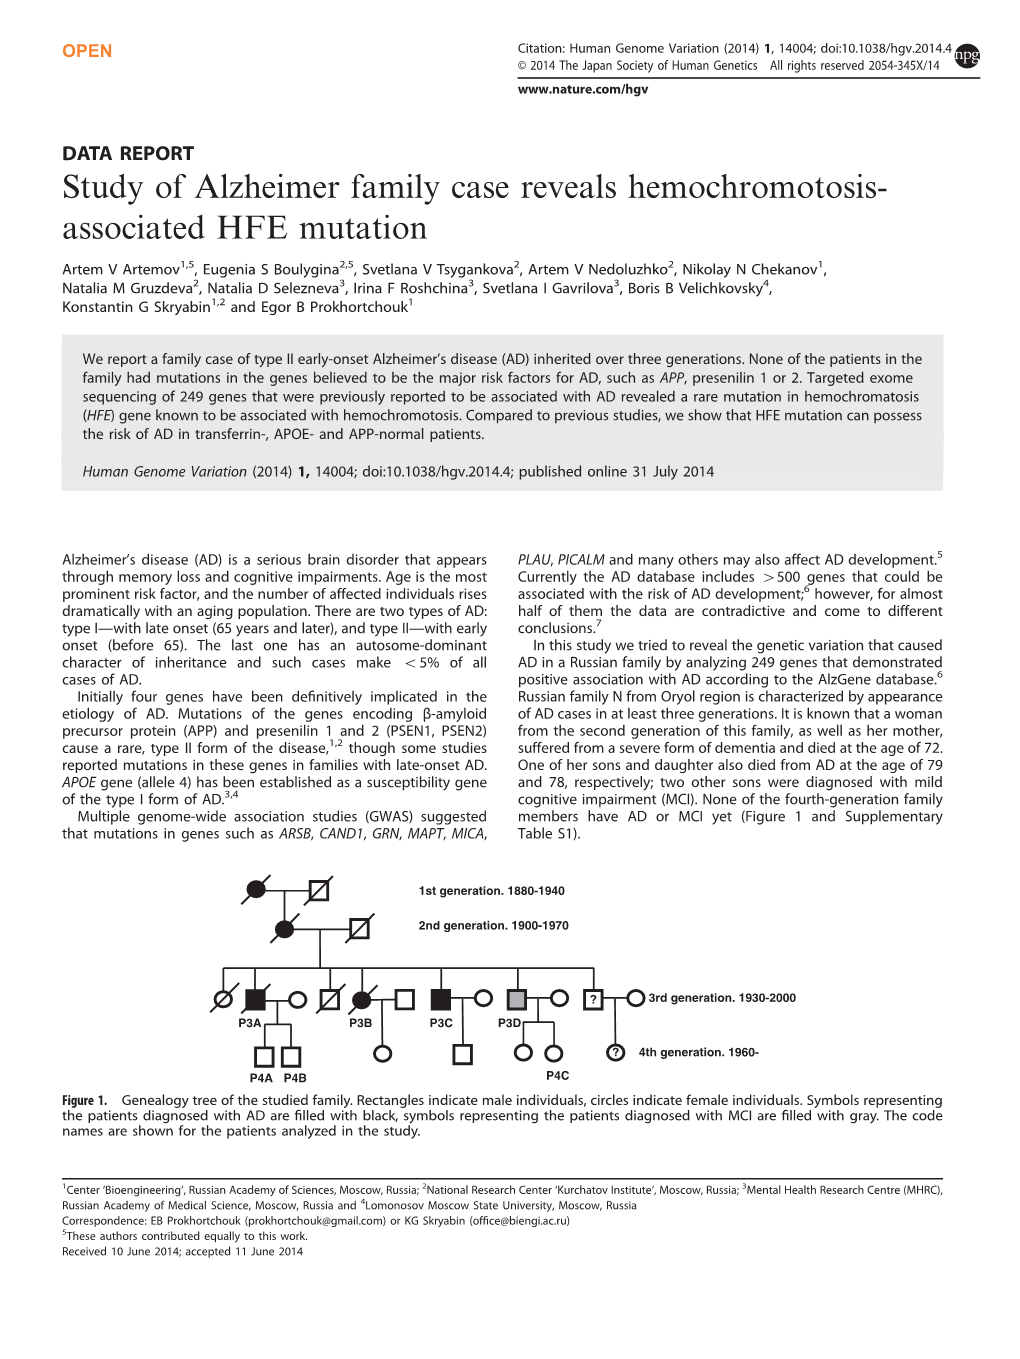 Study of Alzheimer Family Case Reveals Hemochromotosis-Associated HFE